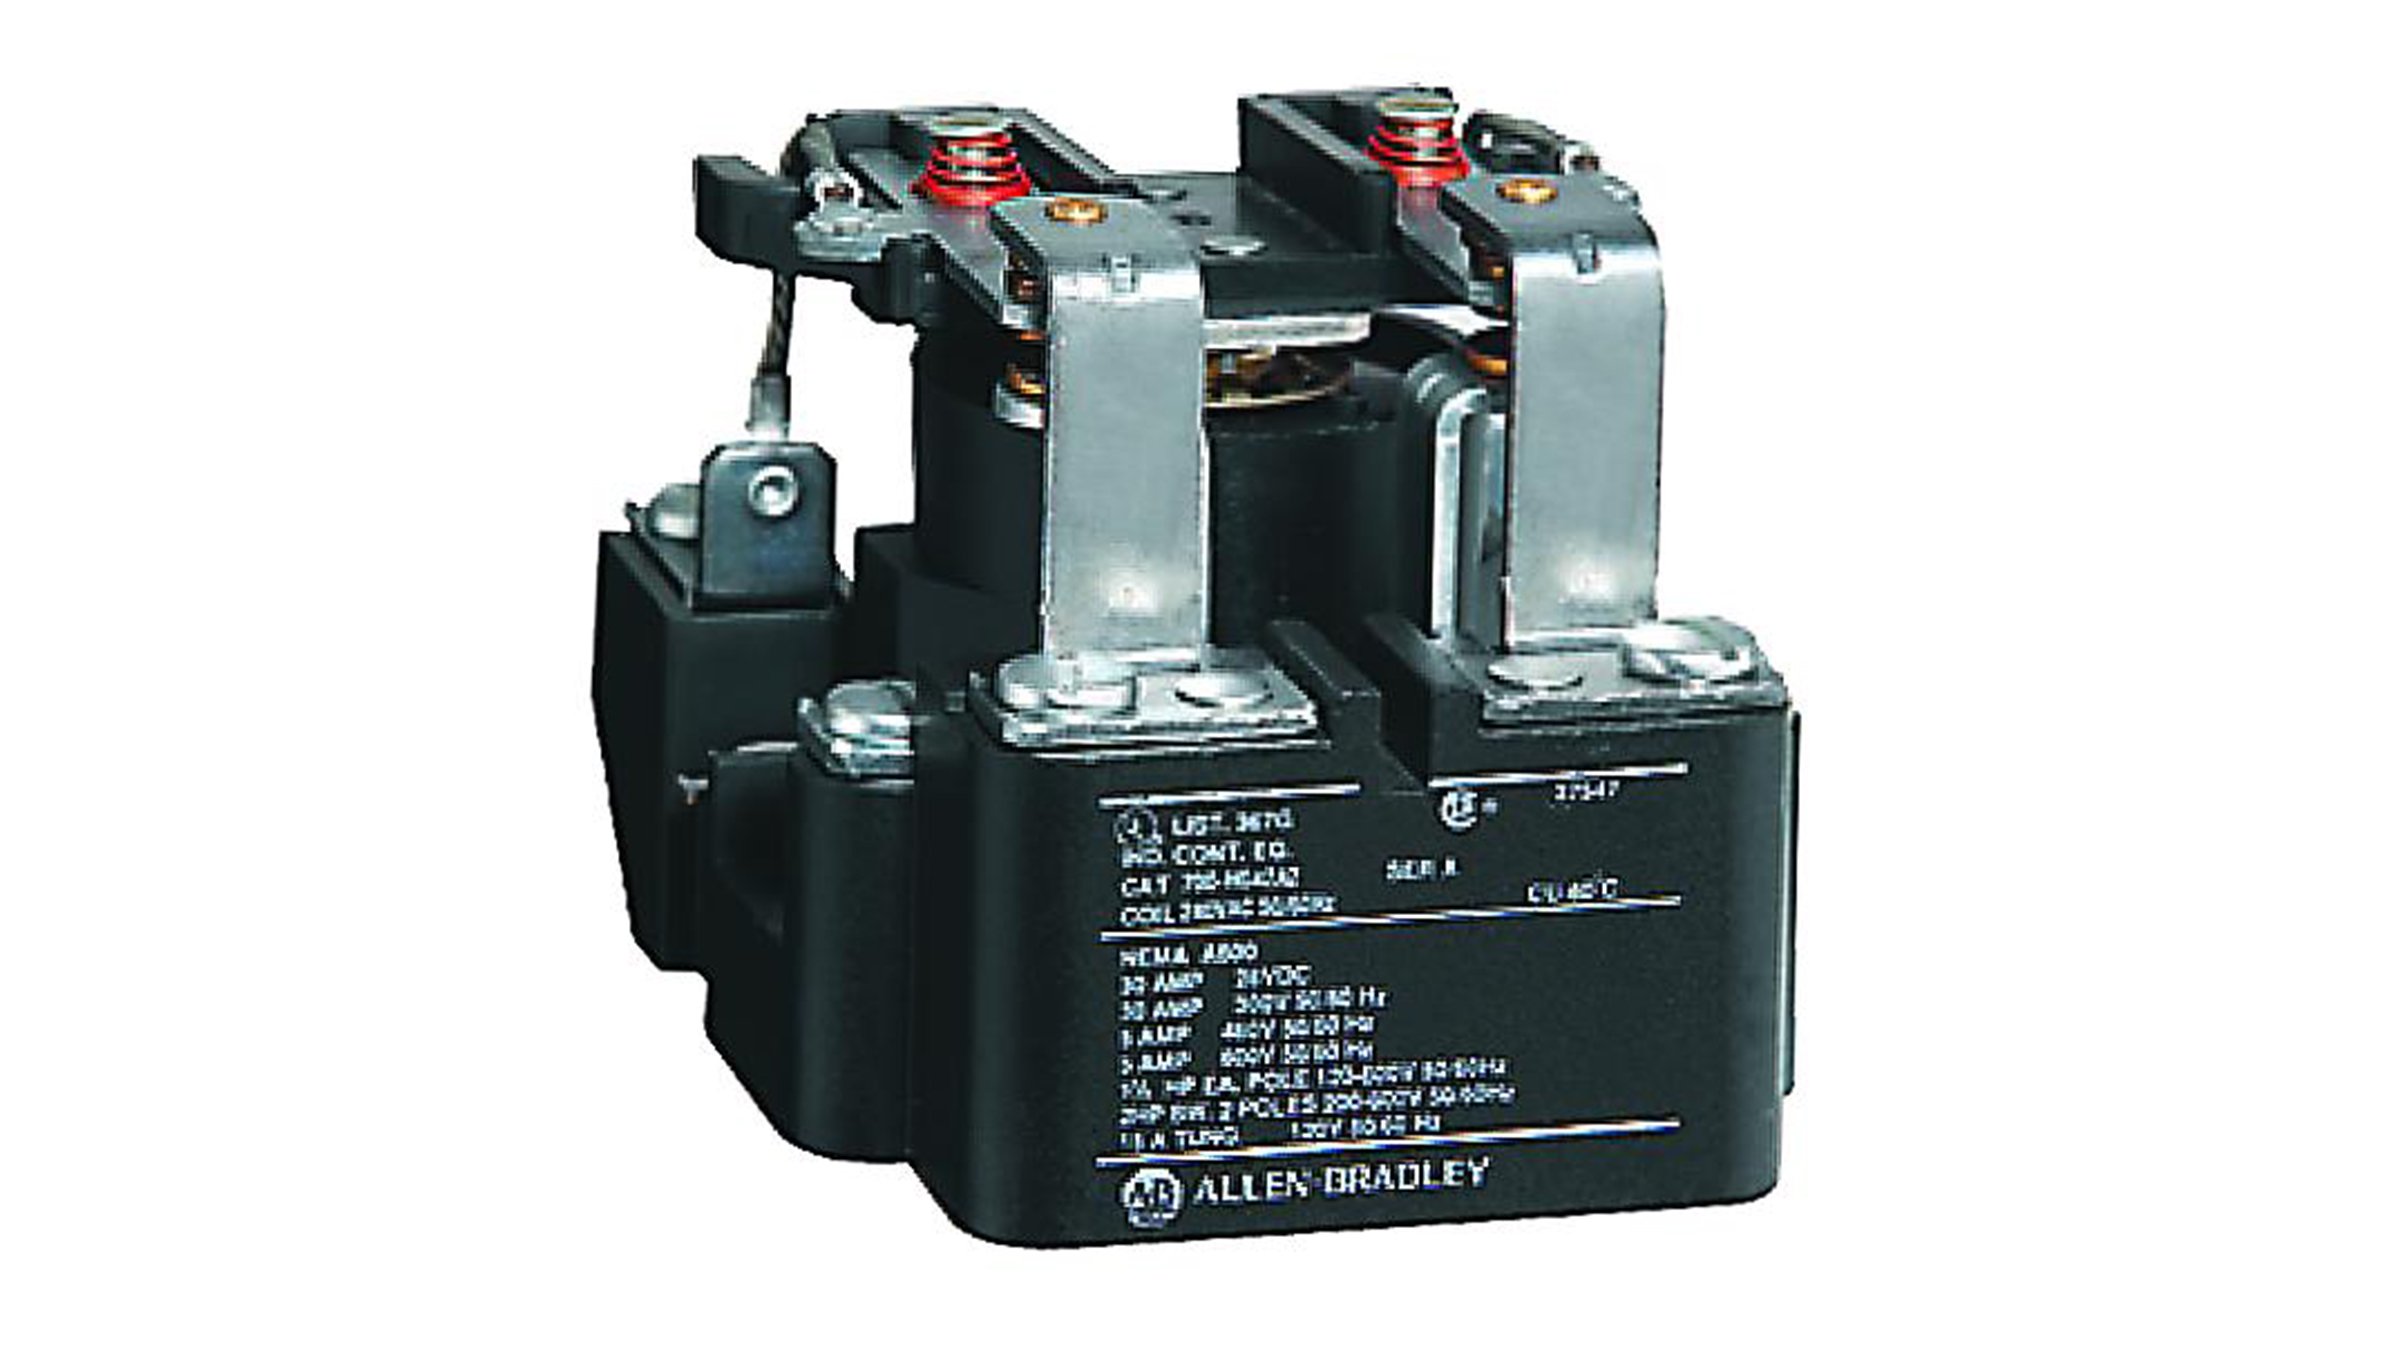 Los relés de alimentación eléctrica Boletín 700-HG de Allen-Bradley son aptos para conmutar cargas de CC.